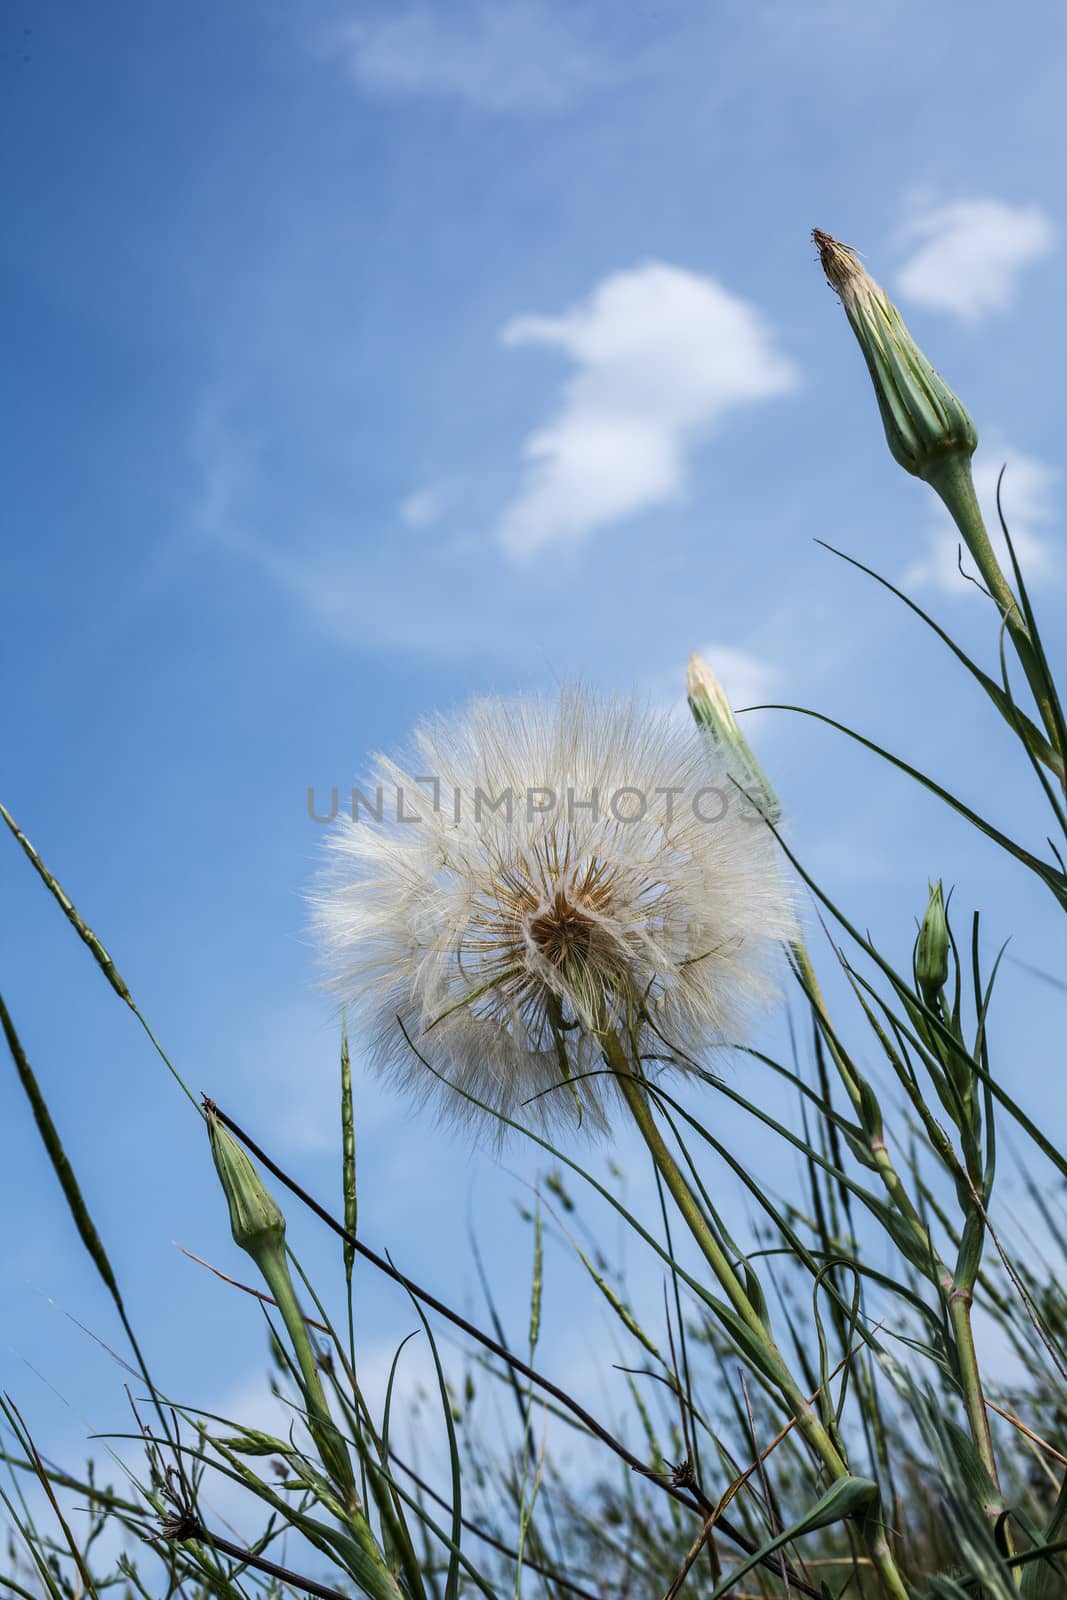 Dandelion close up against the blue sky